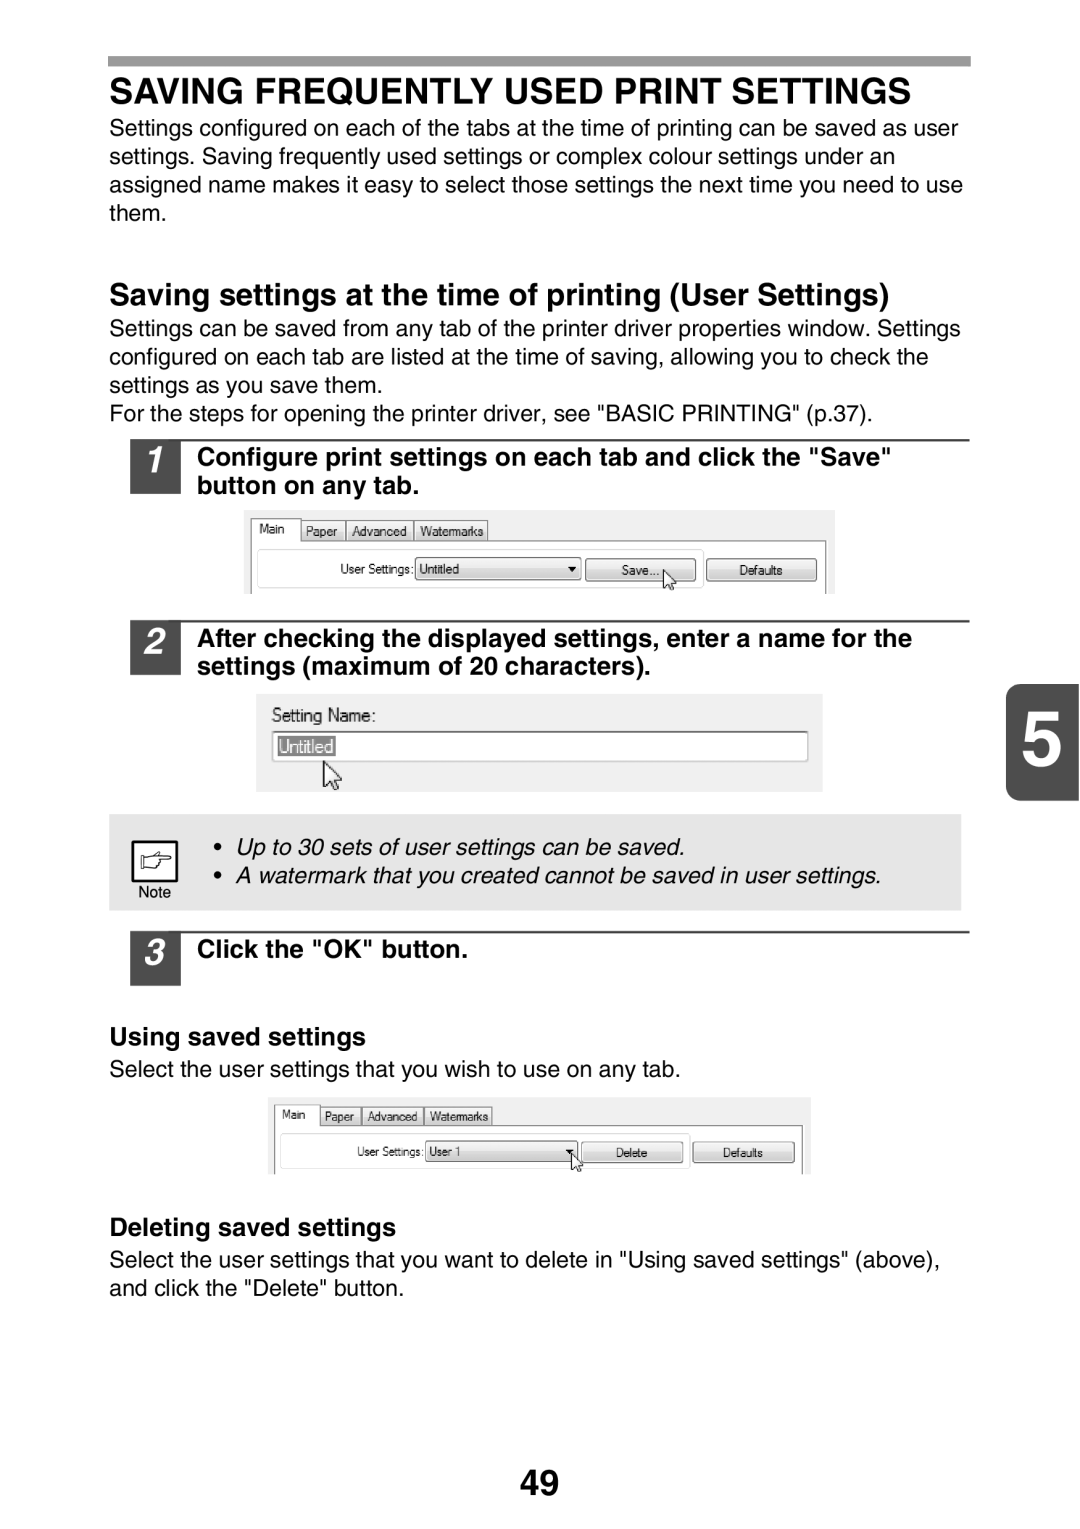 Sharp AL2021, AL2041 manual Saving Frequently Used Print Settings, Saving settings at the time of printing User Settings 